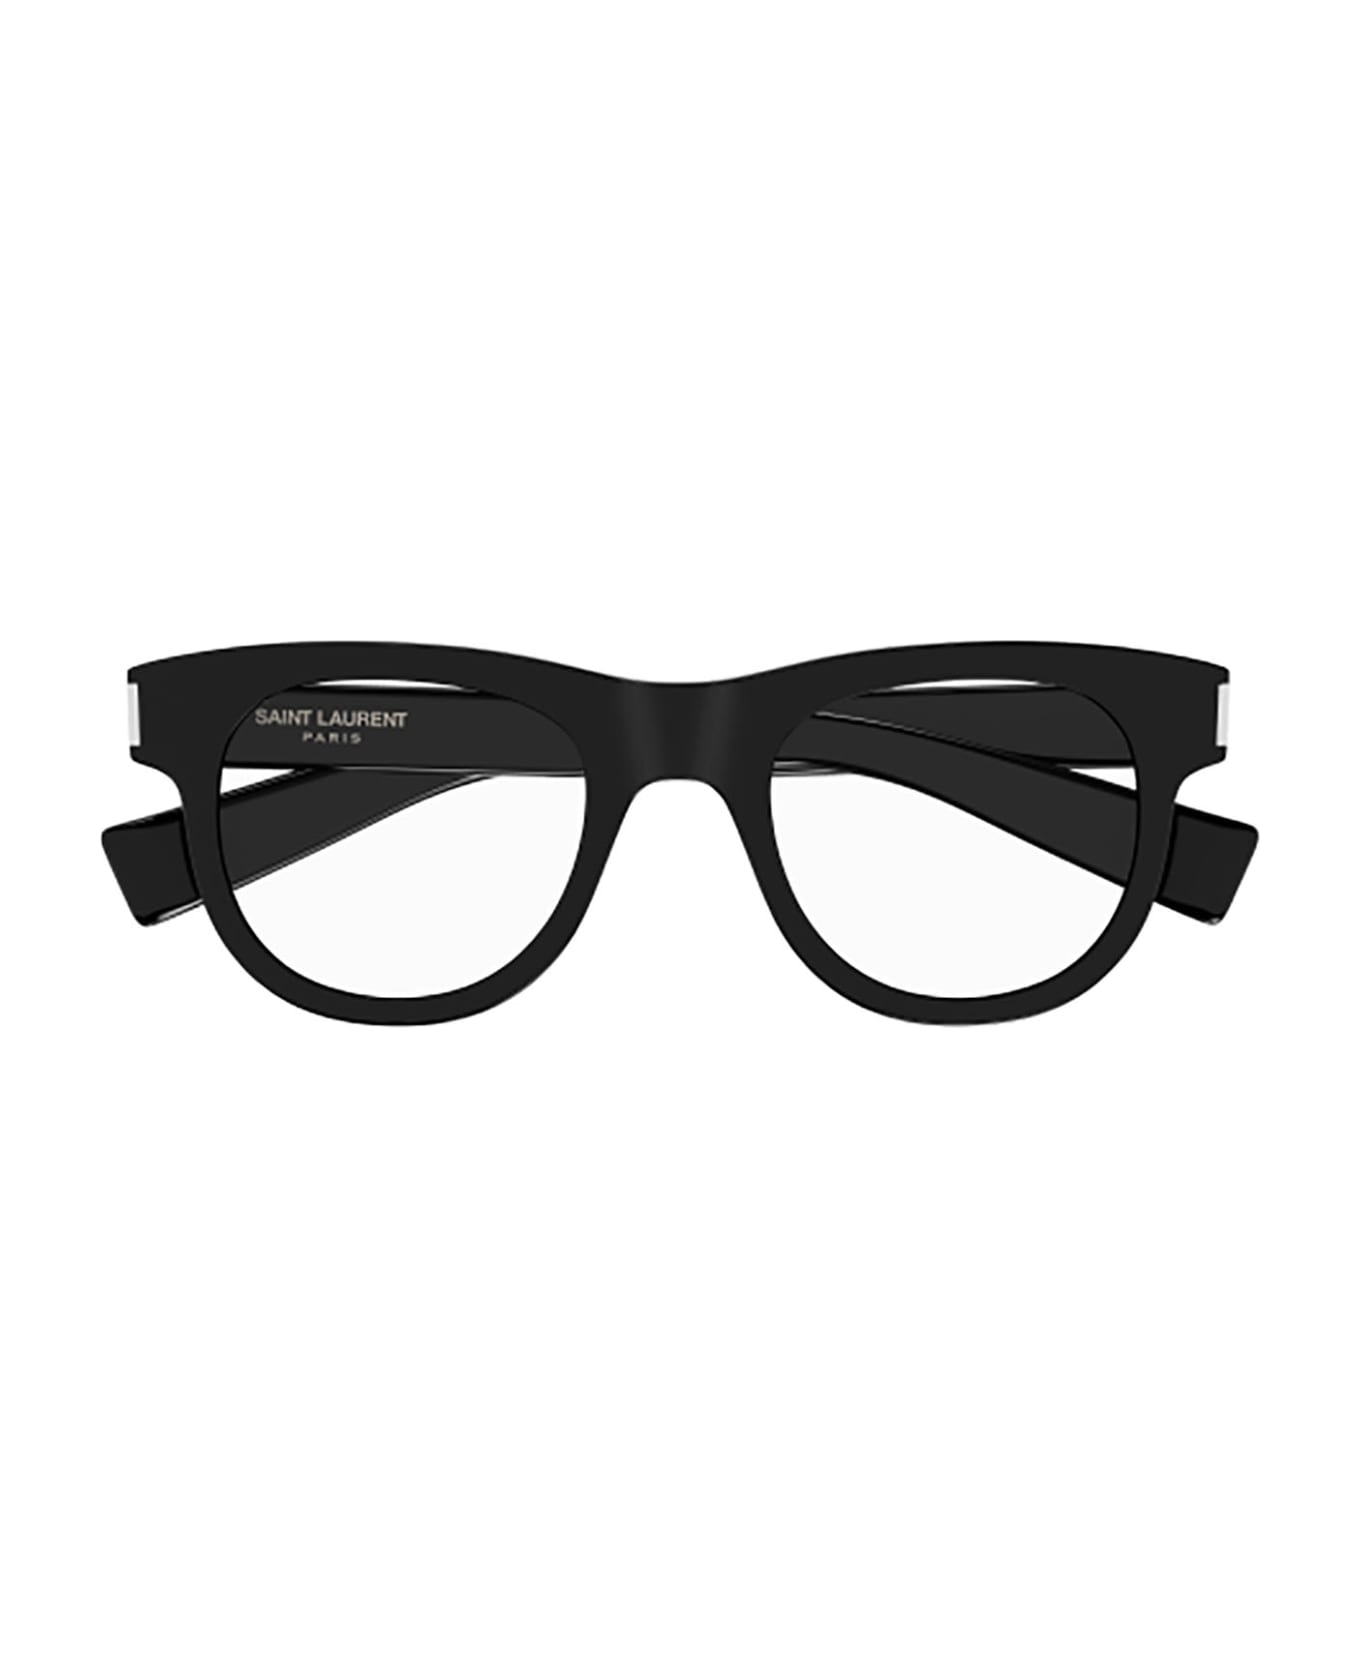 Saint Laurent Eyewear SL 571 OPT Eyewear - Black Black Transpare